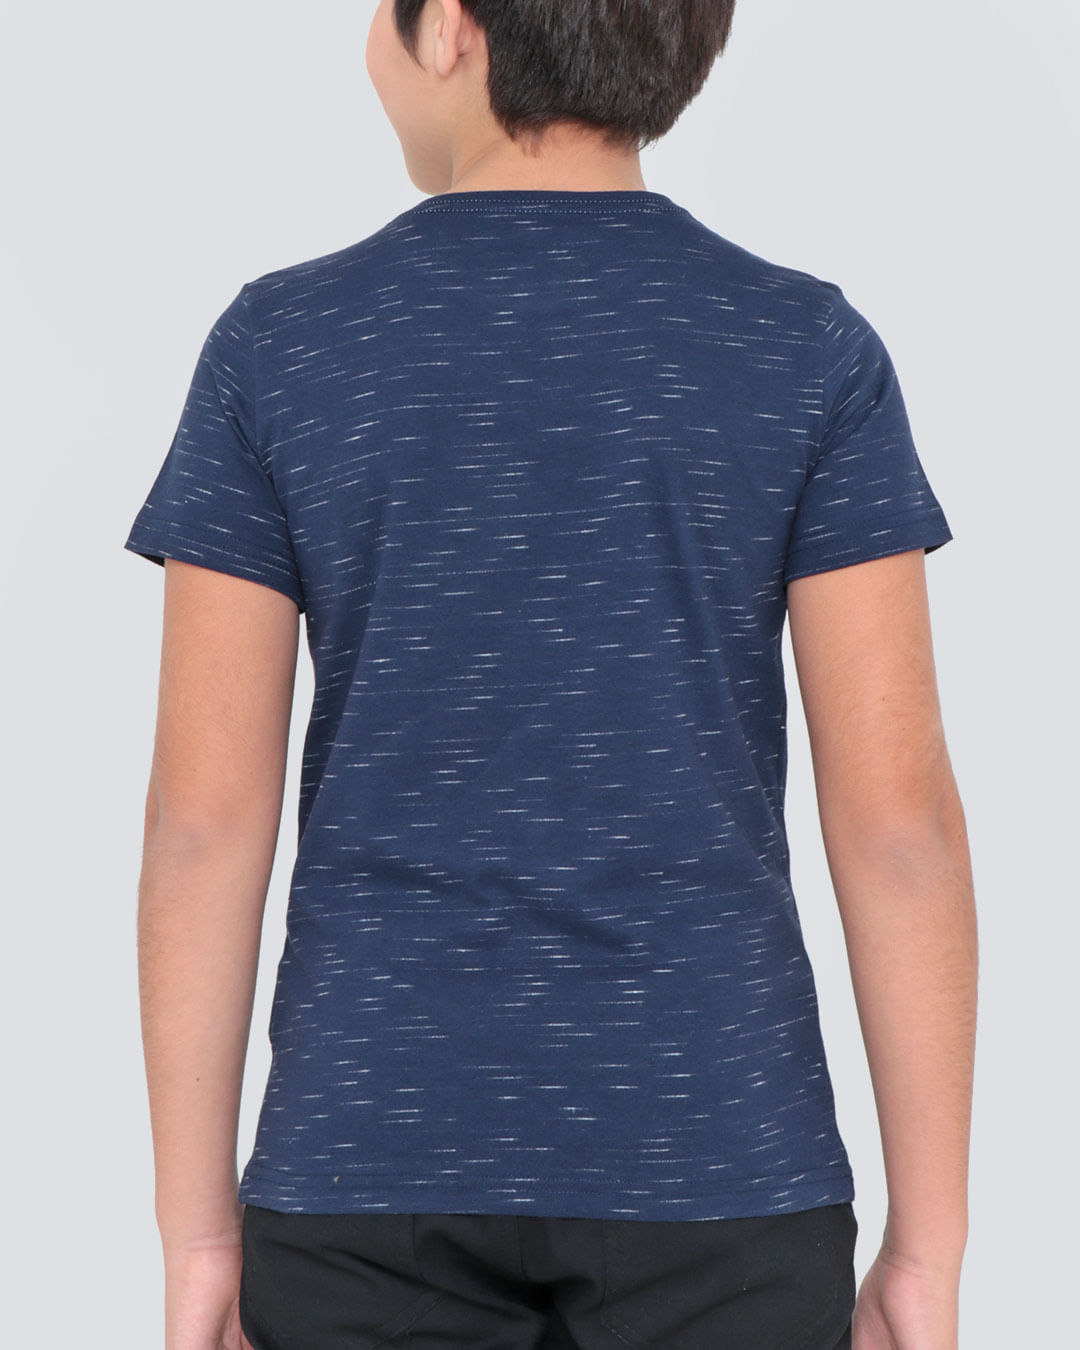 Camiseta-Juvenil-Pernalonga-Looney-Tunes-Azul-Marinho